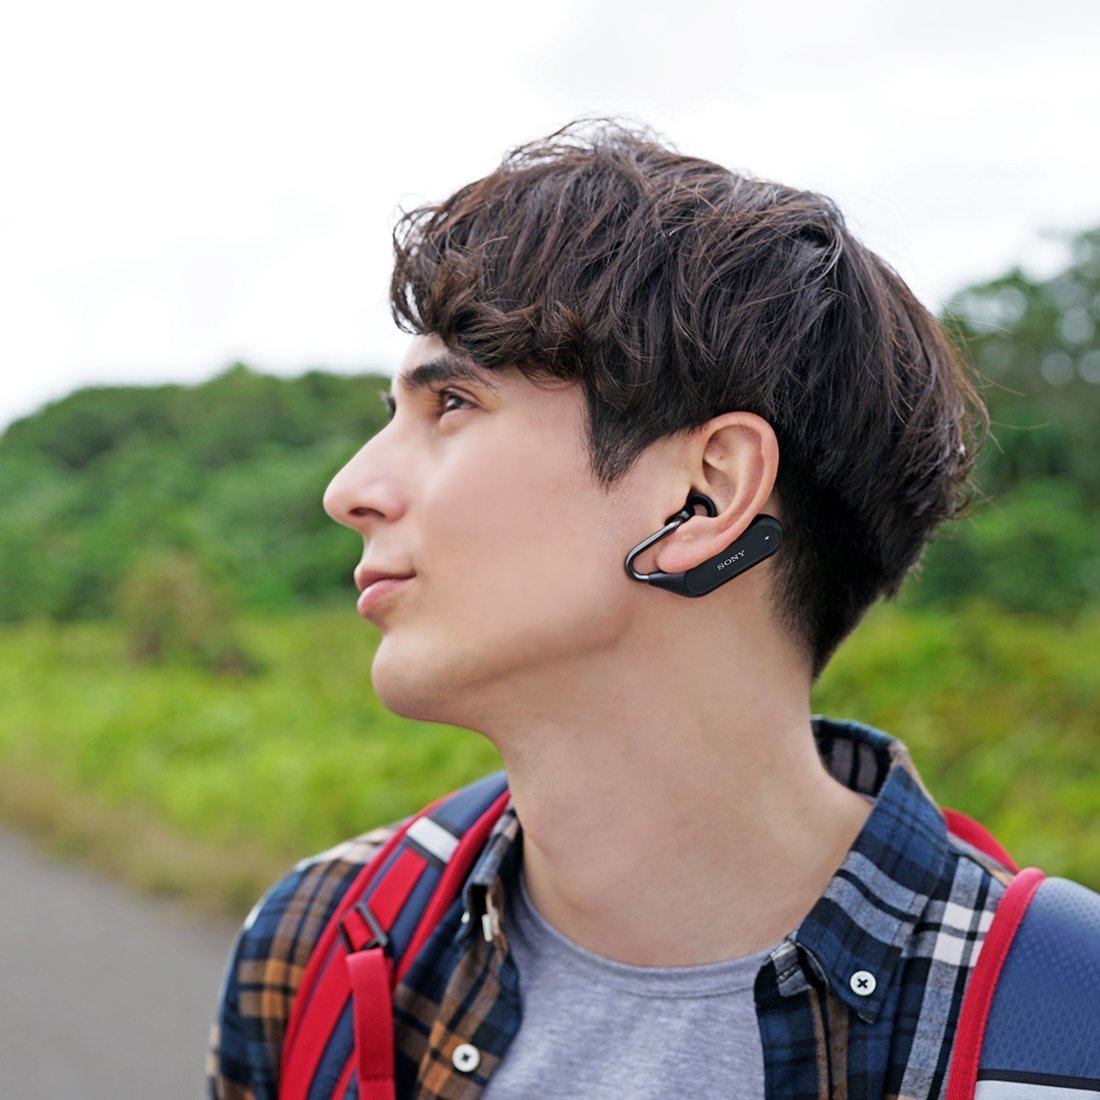 【SONY】 完全ワイヤレスイヤホン Xperia Ear Duo